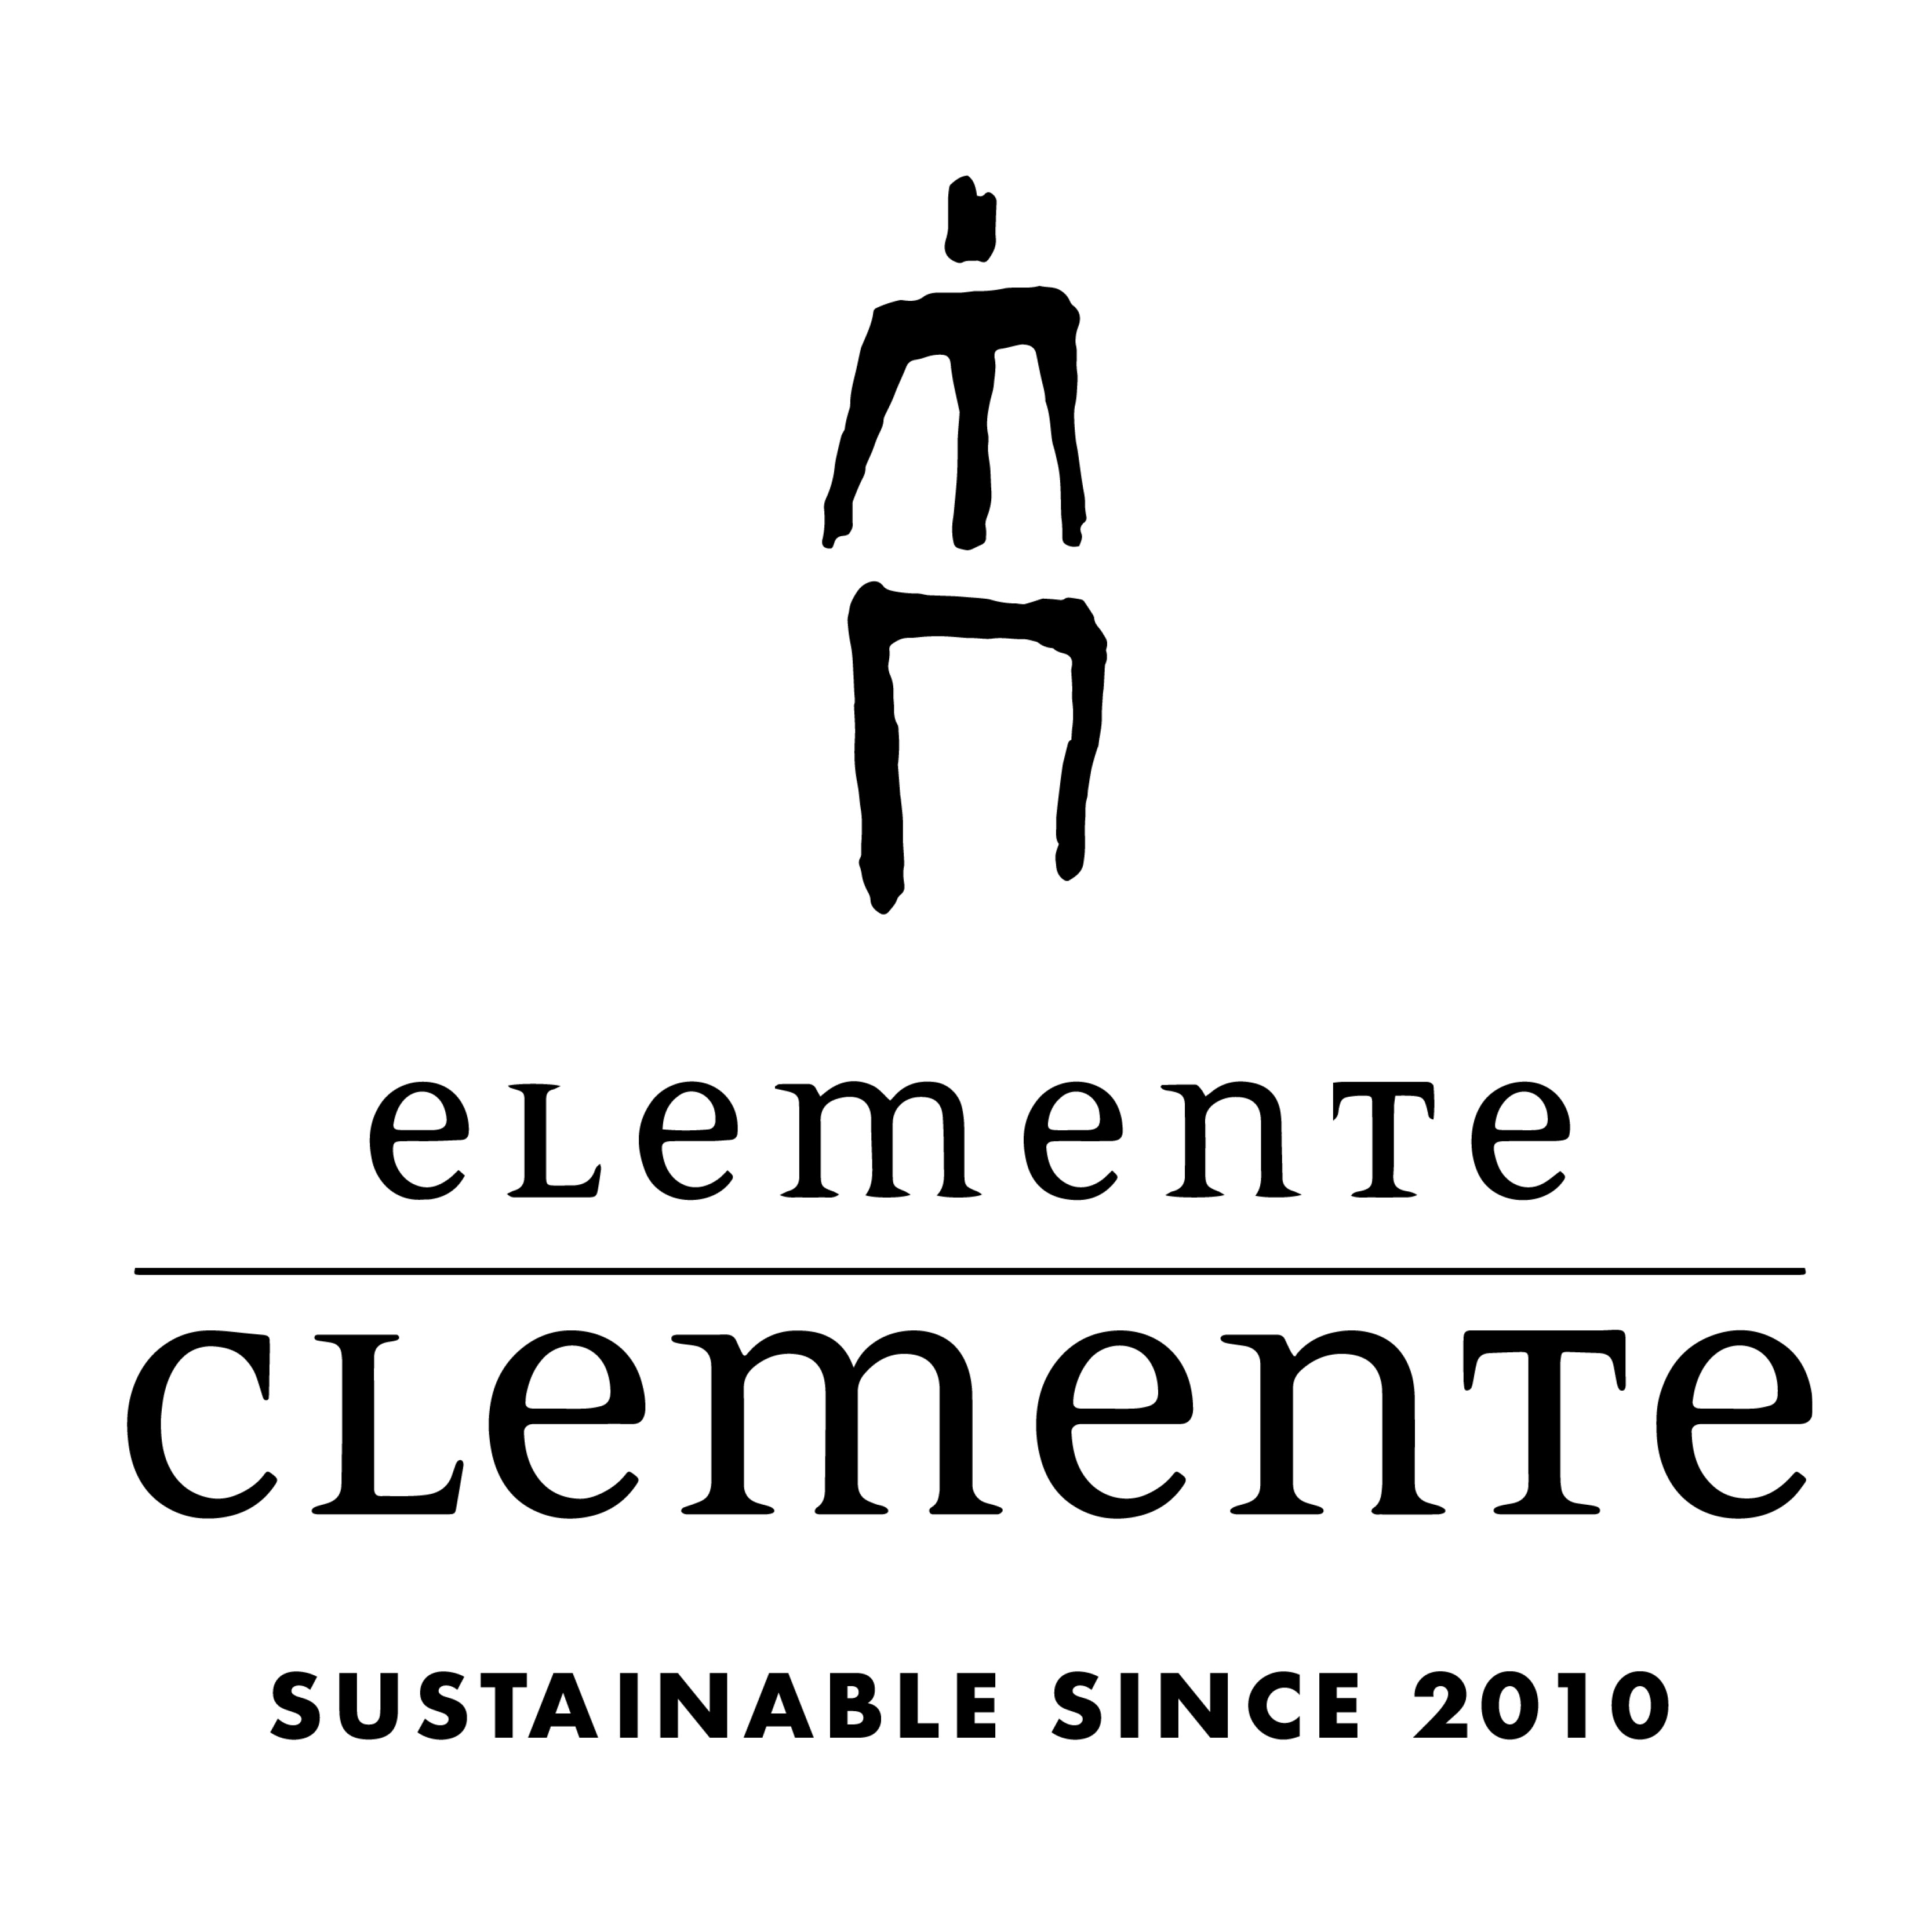 Elemente Clemente